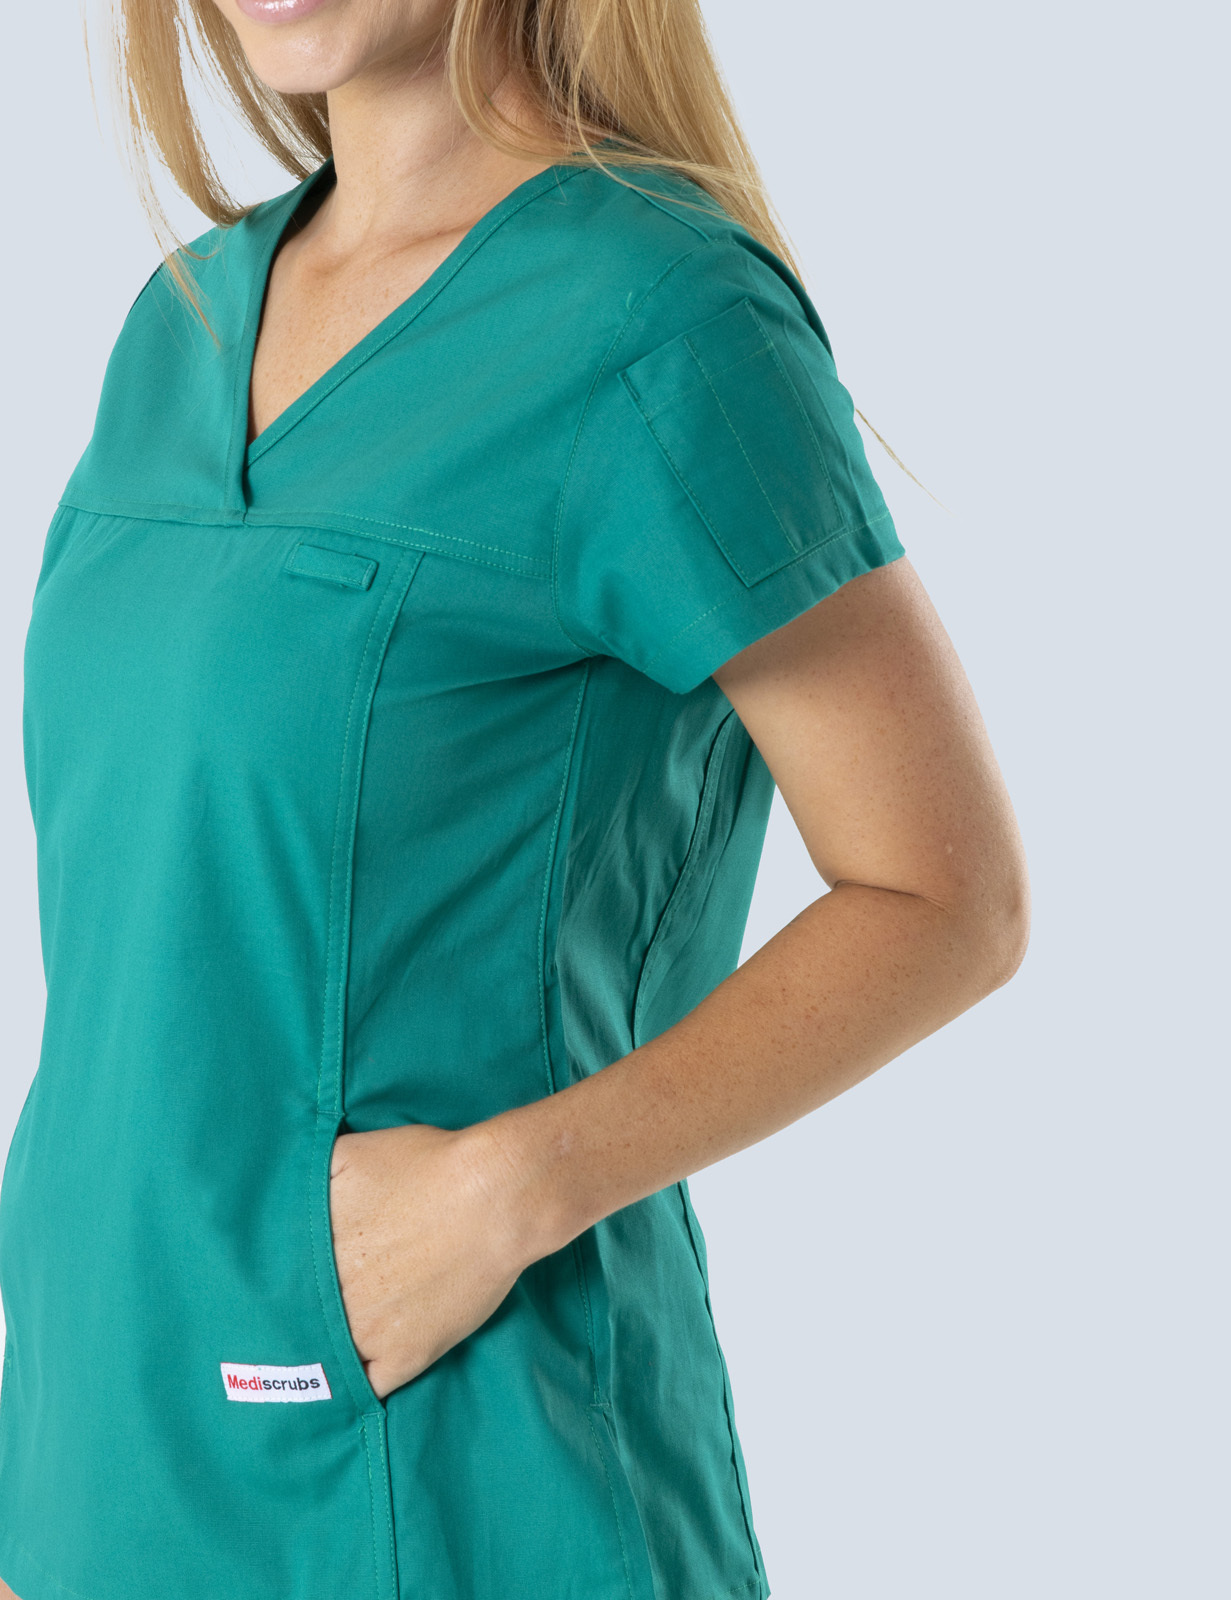 Queensland Children's Hospital Emergency Department Clinical Nurse  Uniform Top Bundle  (Women's Fit Top in Hunter  incl Logos)